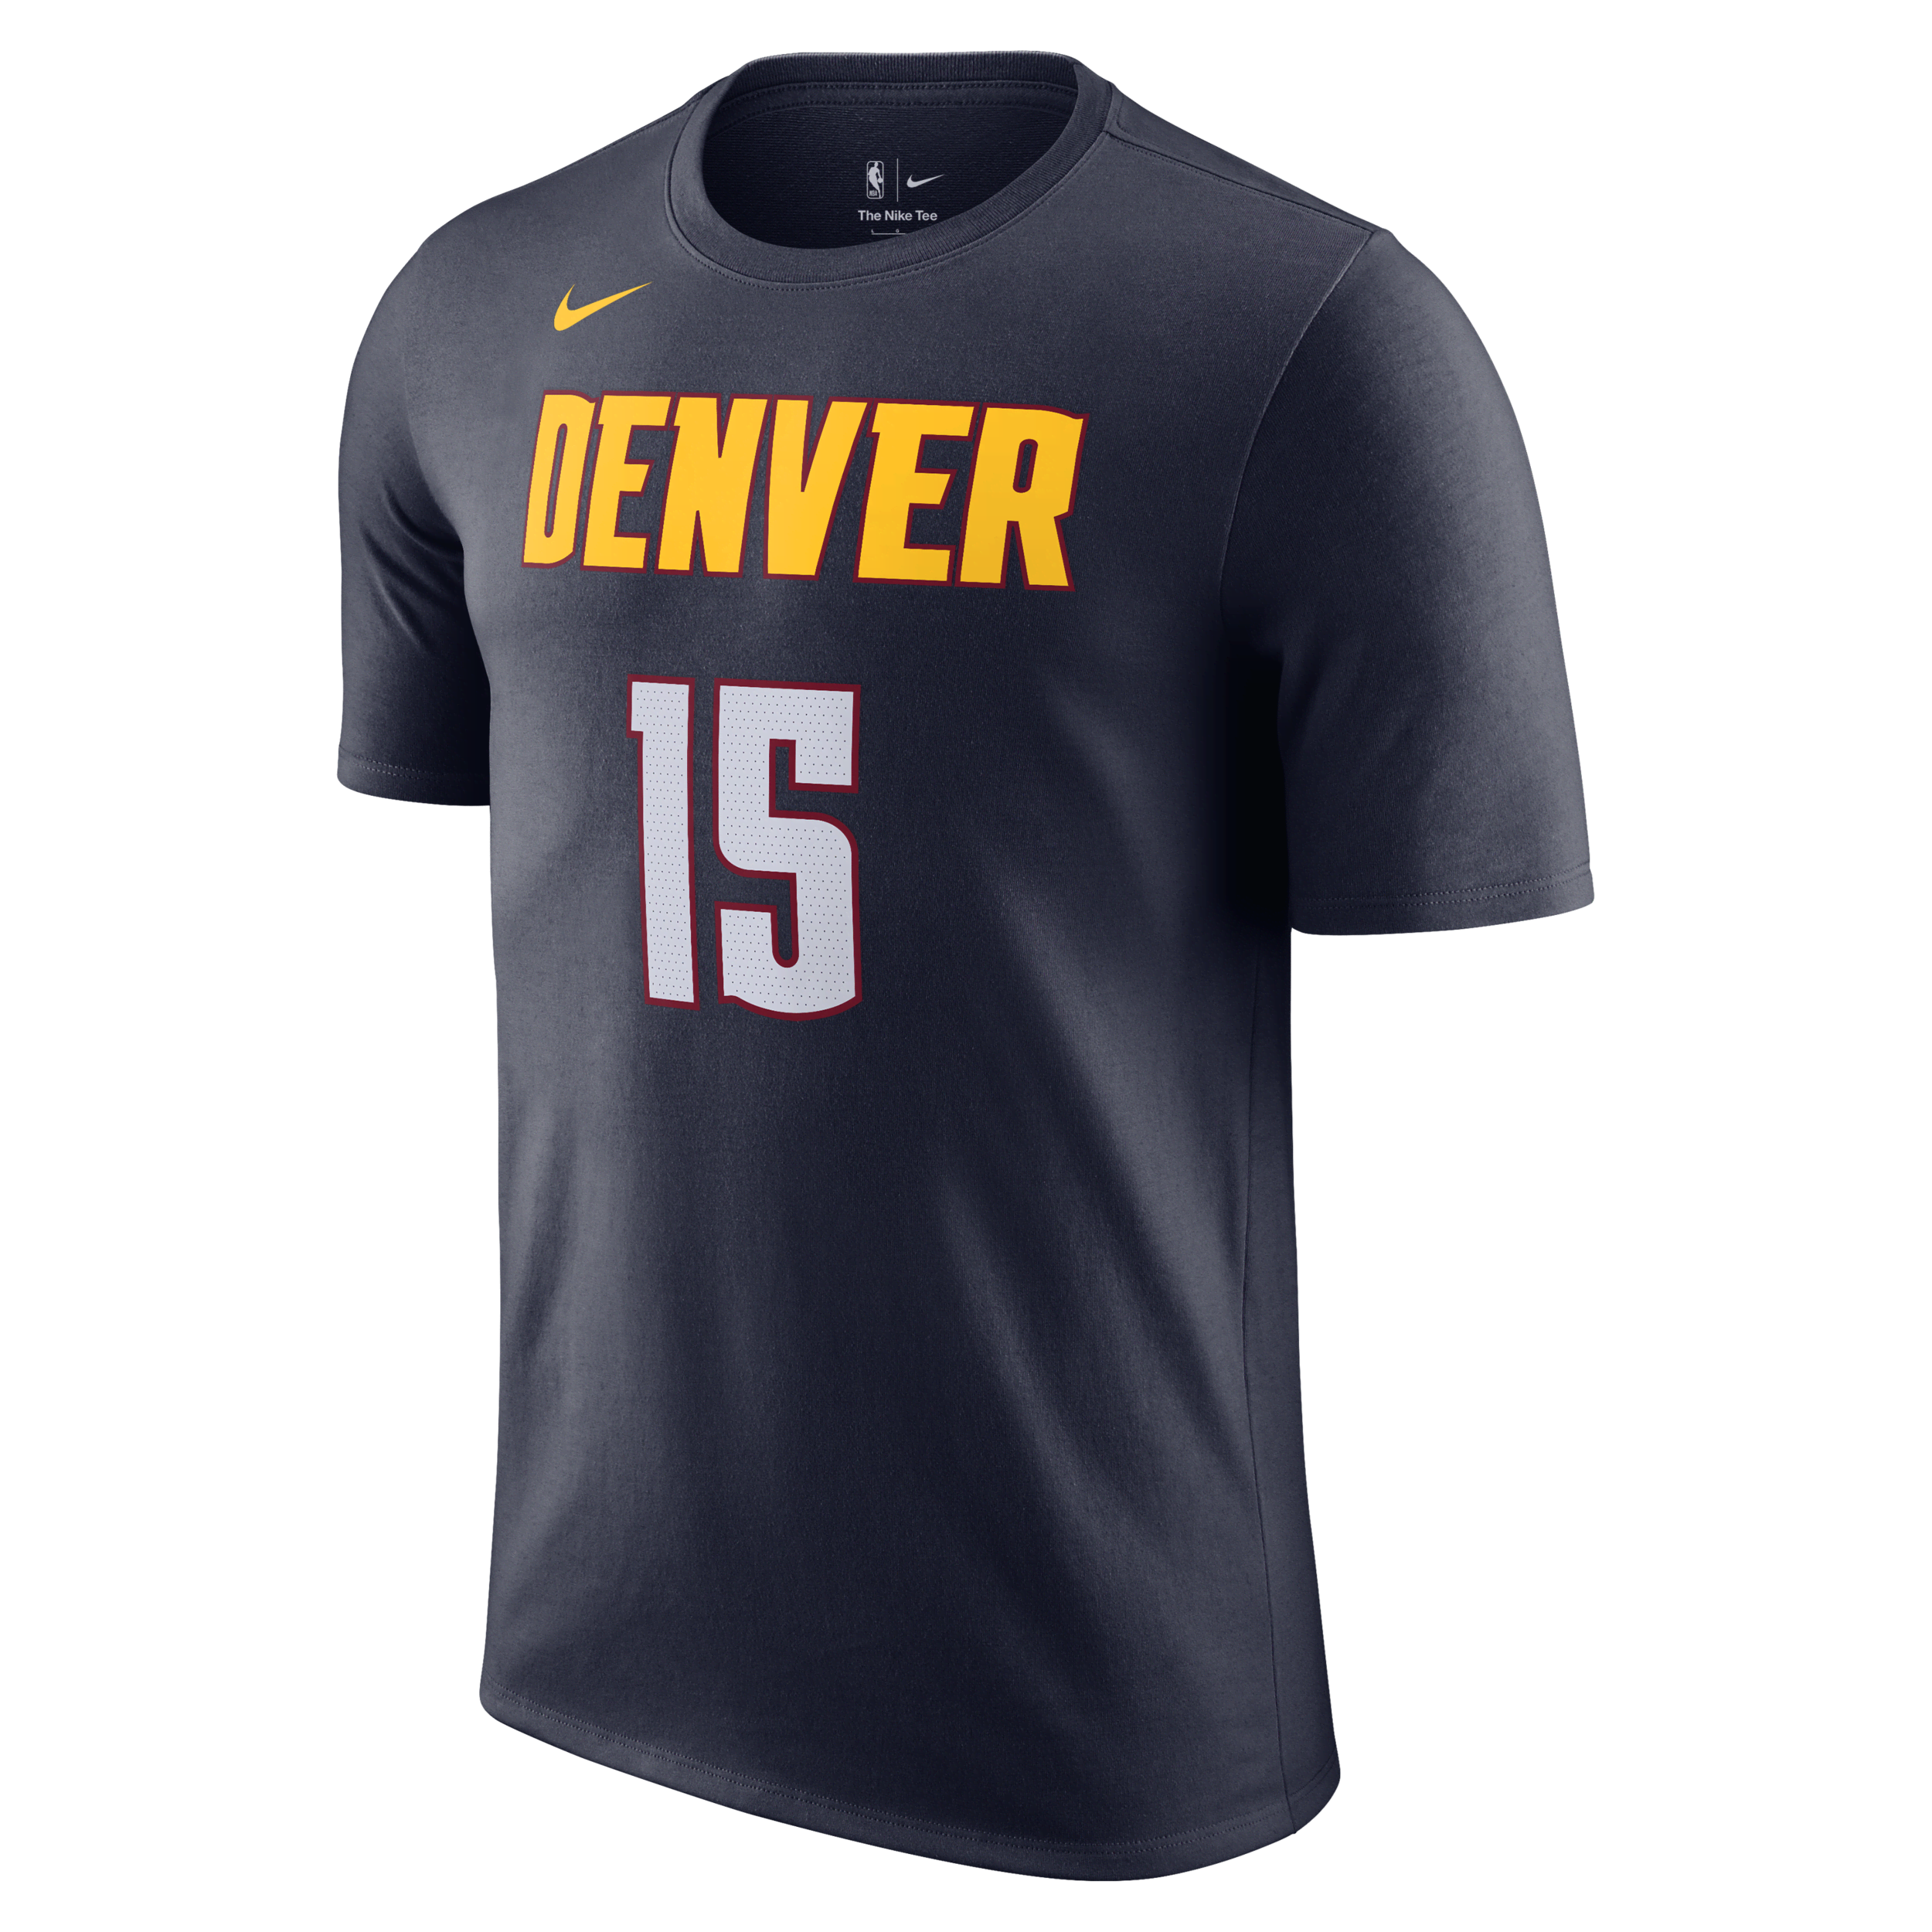 T-shirt męski Nike NBA Denver Nuggets - Niebieski